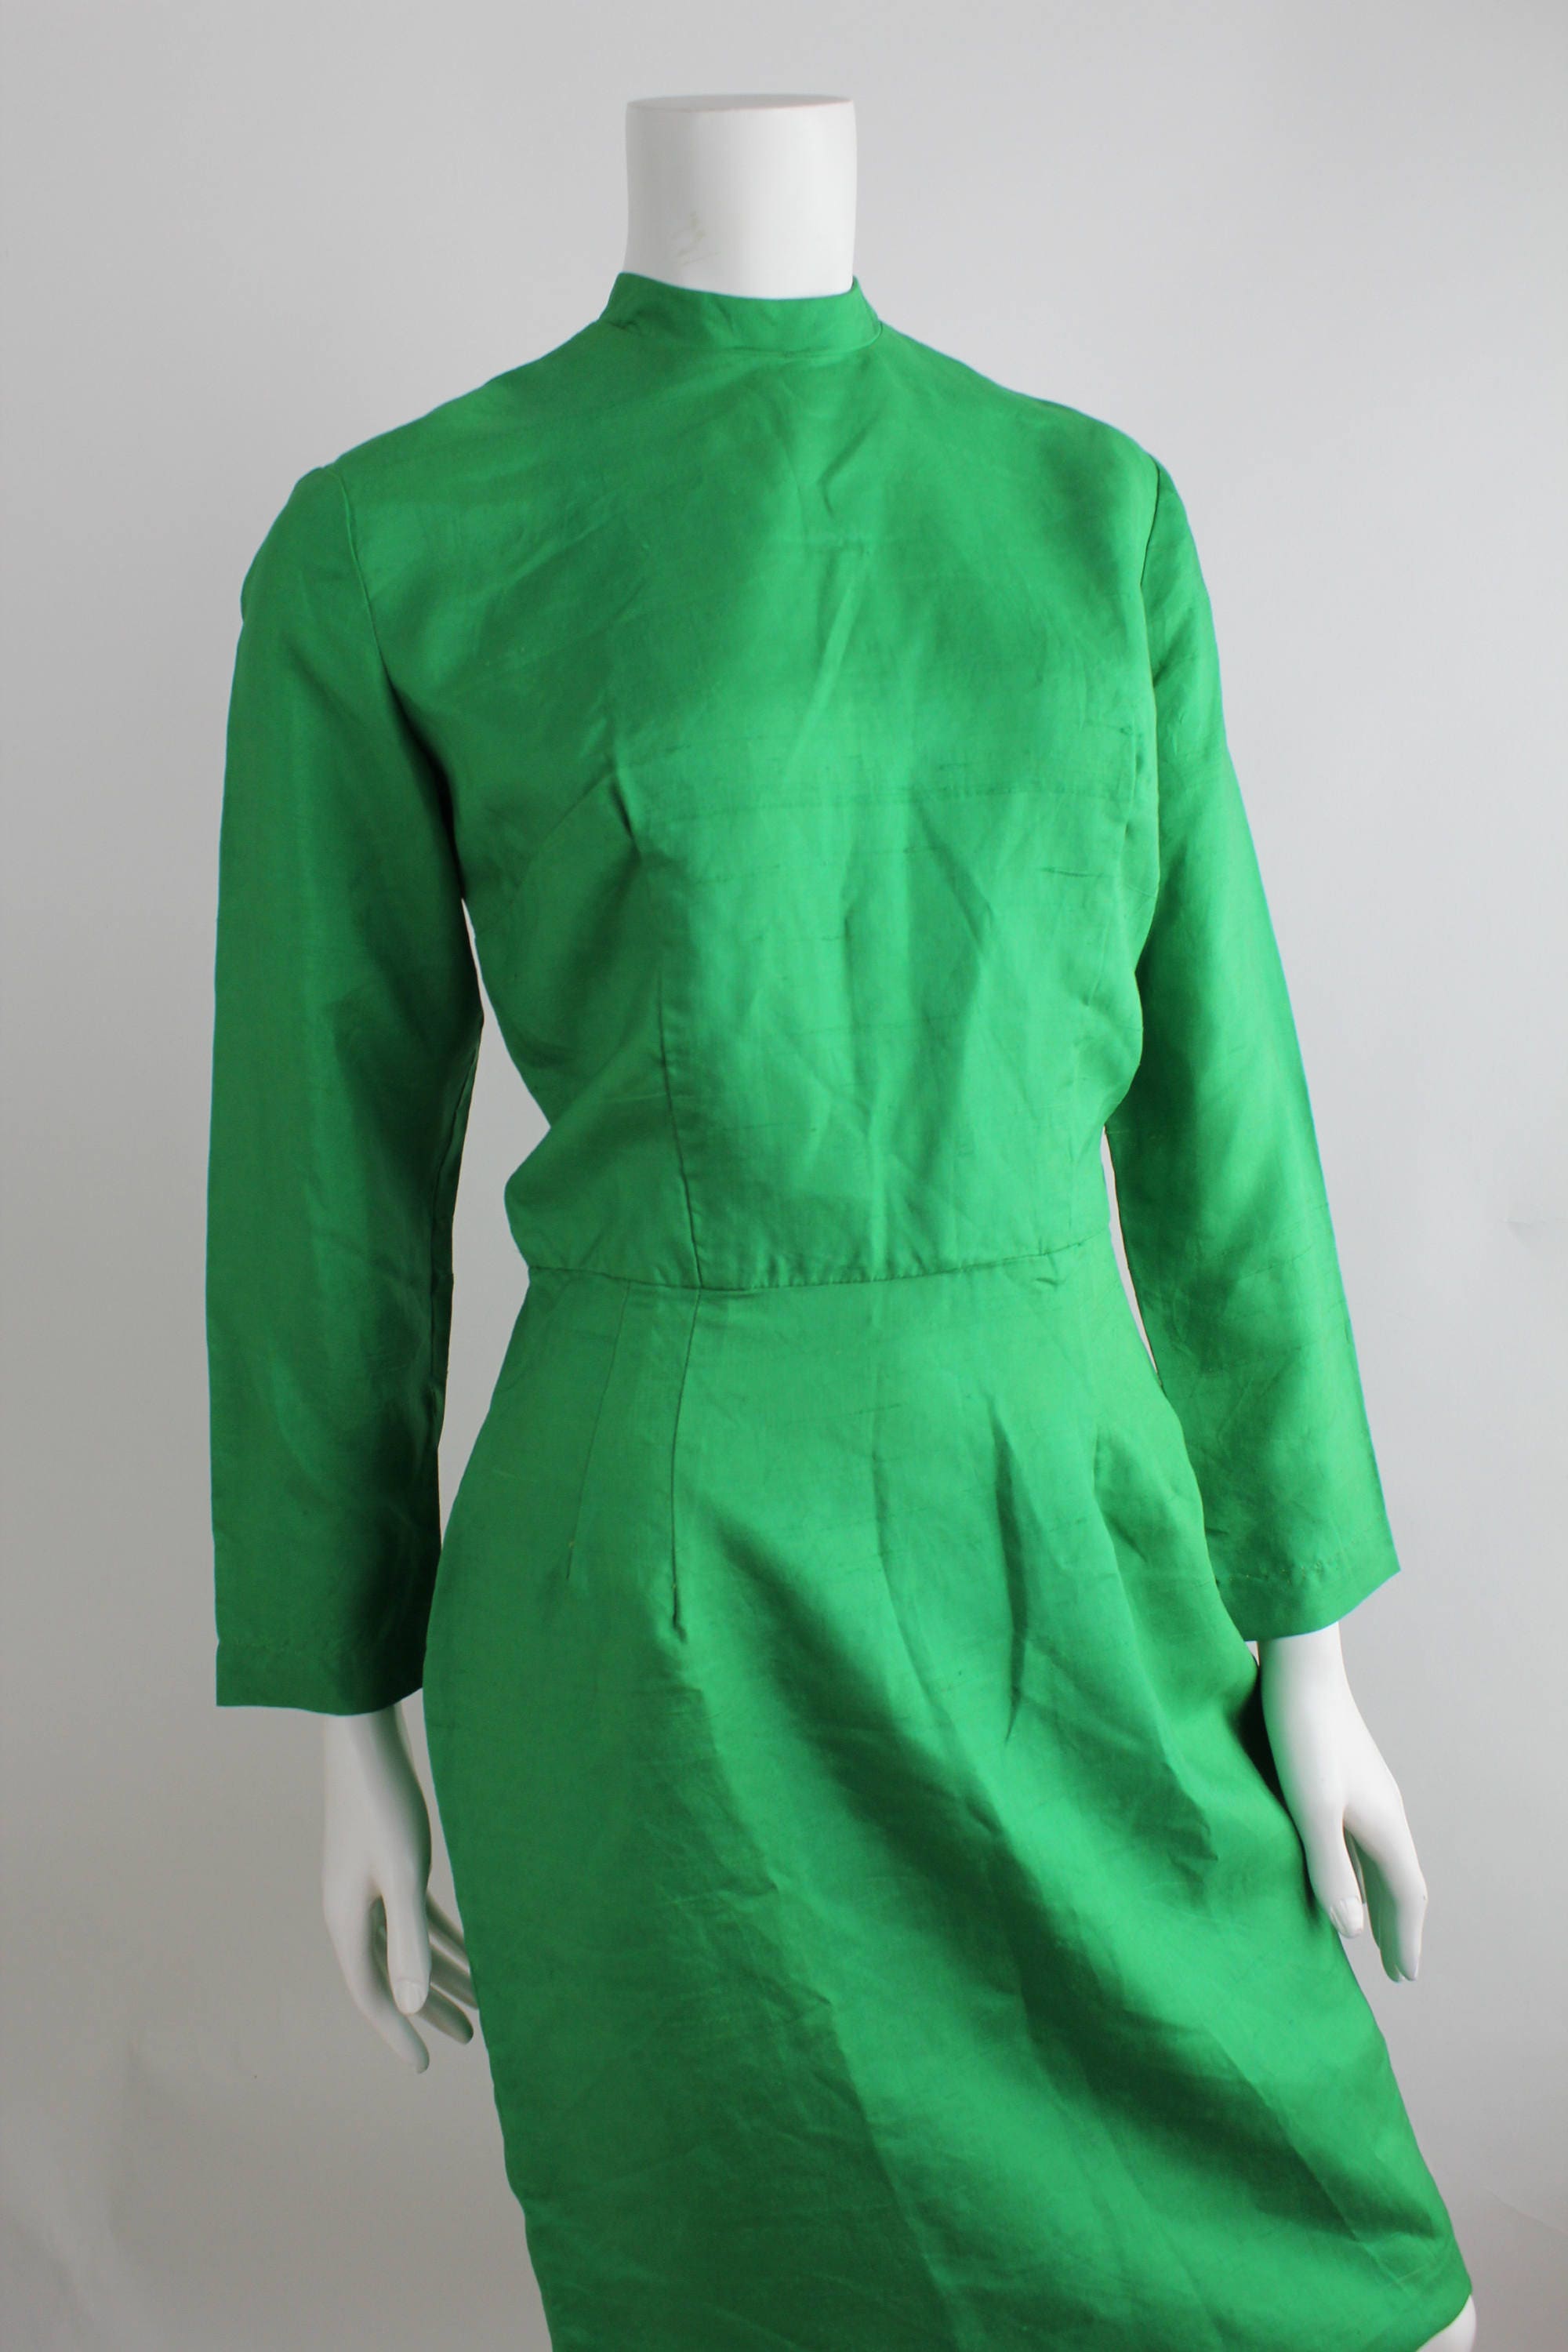 Vintage Kelly Green Sheath Dress 1960s Dupioni Silk Dress | Etsy